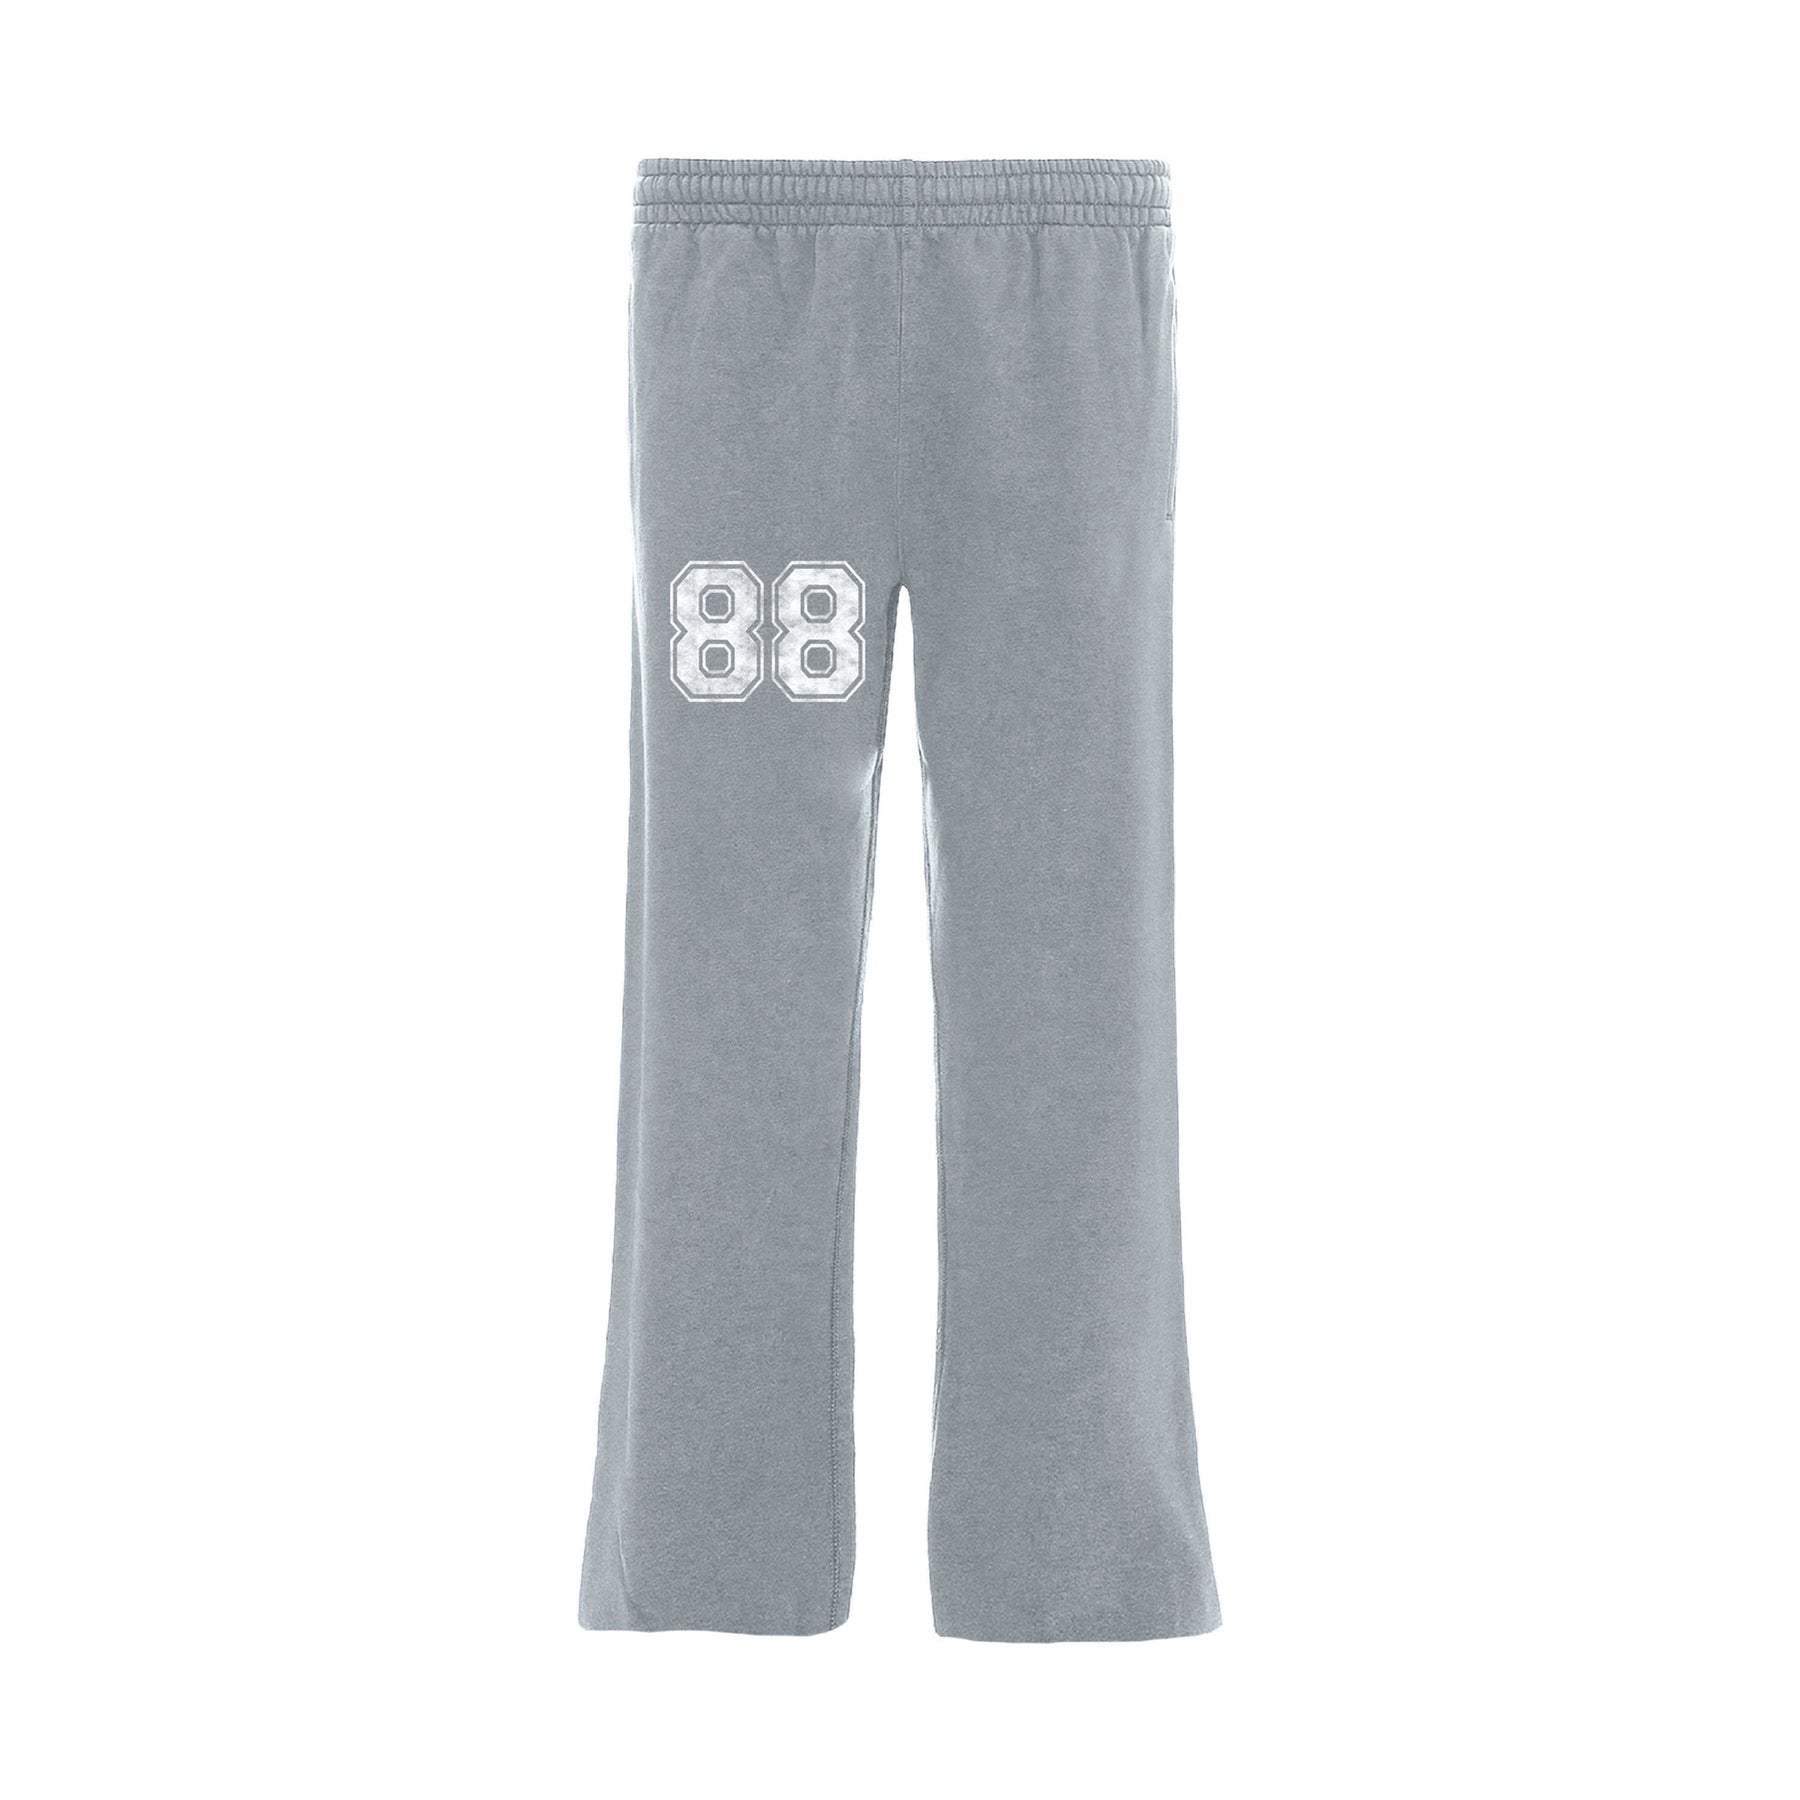 88 Neaux Doubt Neutral Grey Flared Sweatpants